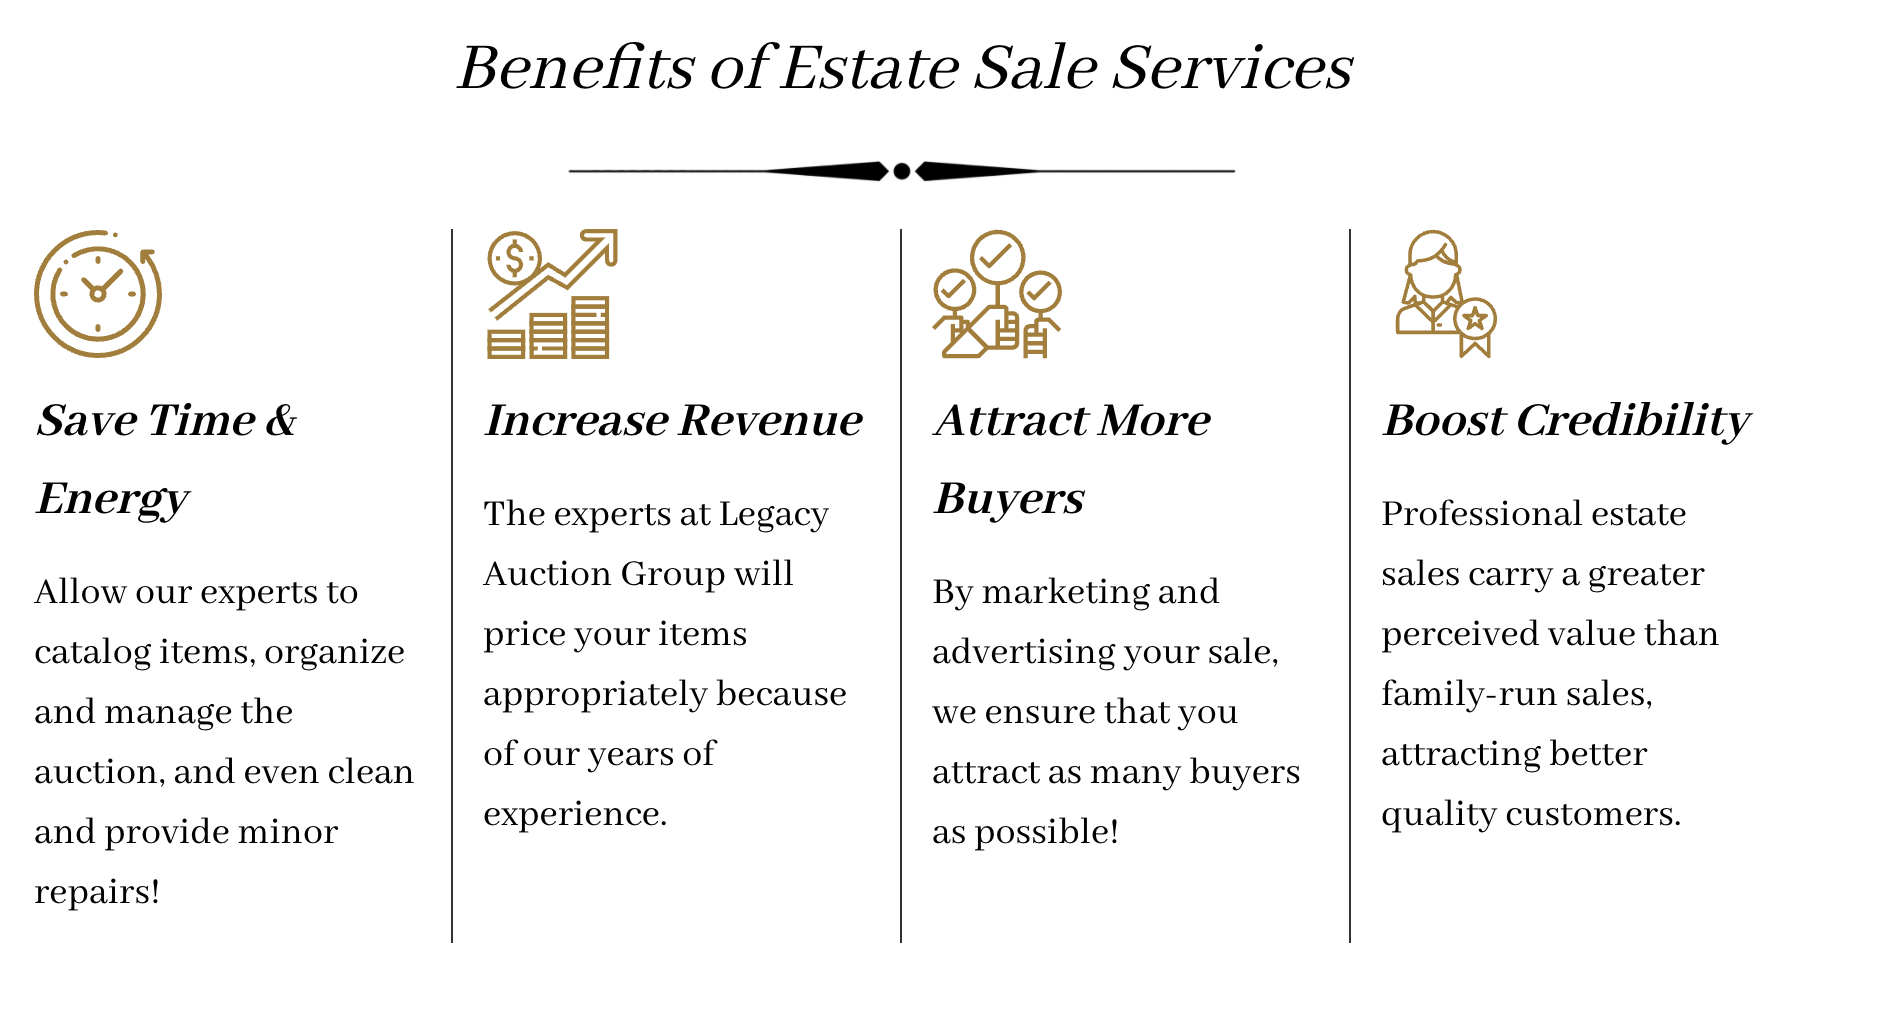 Benefits of Estate Sales Services diagram.